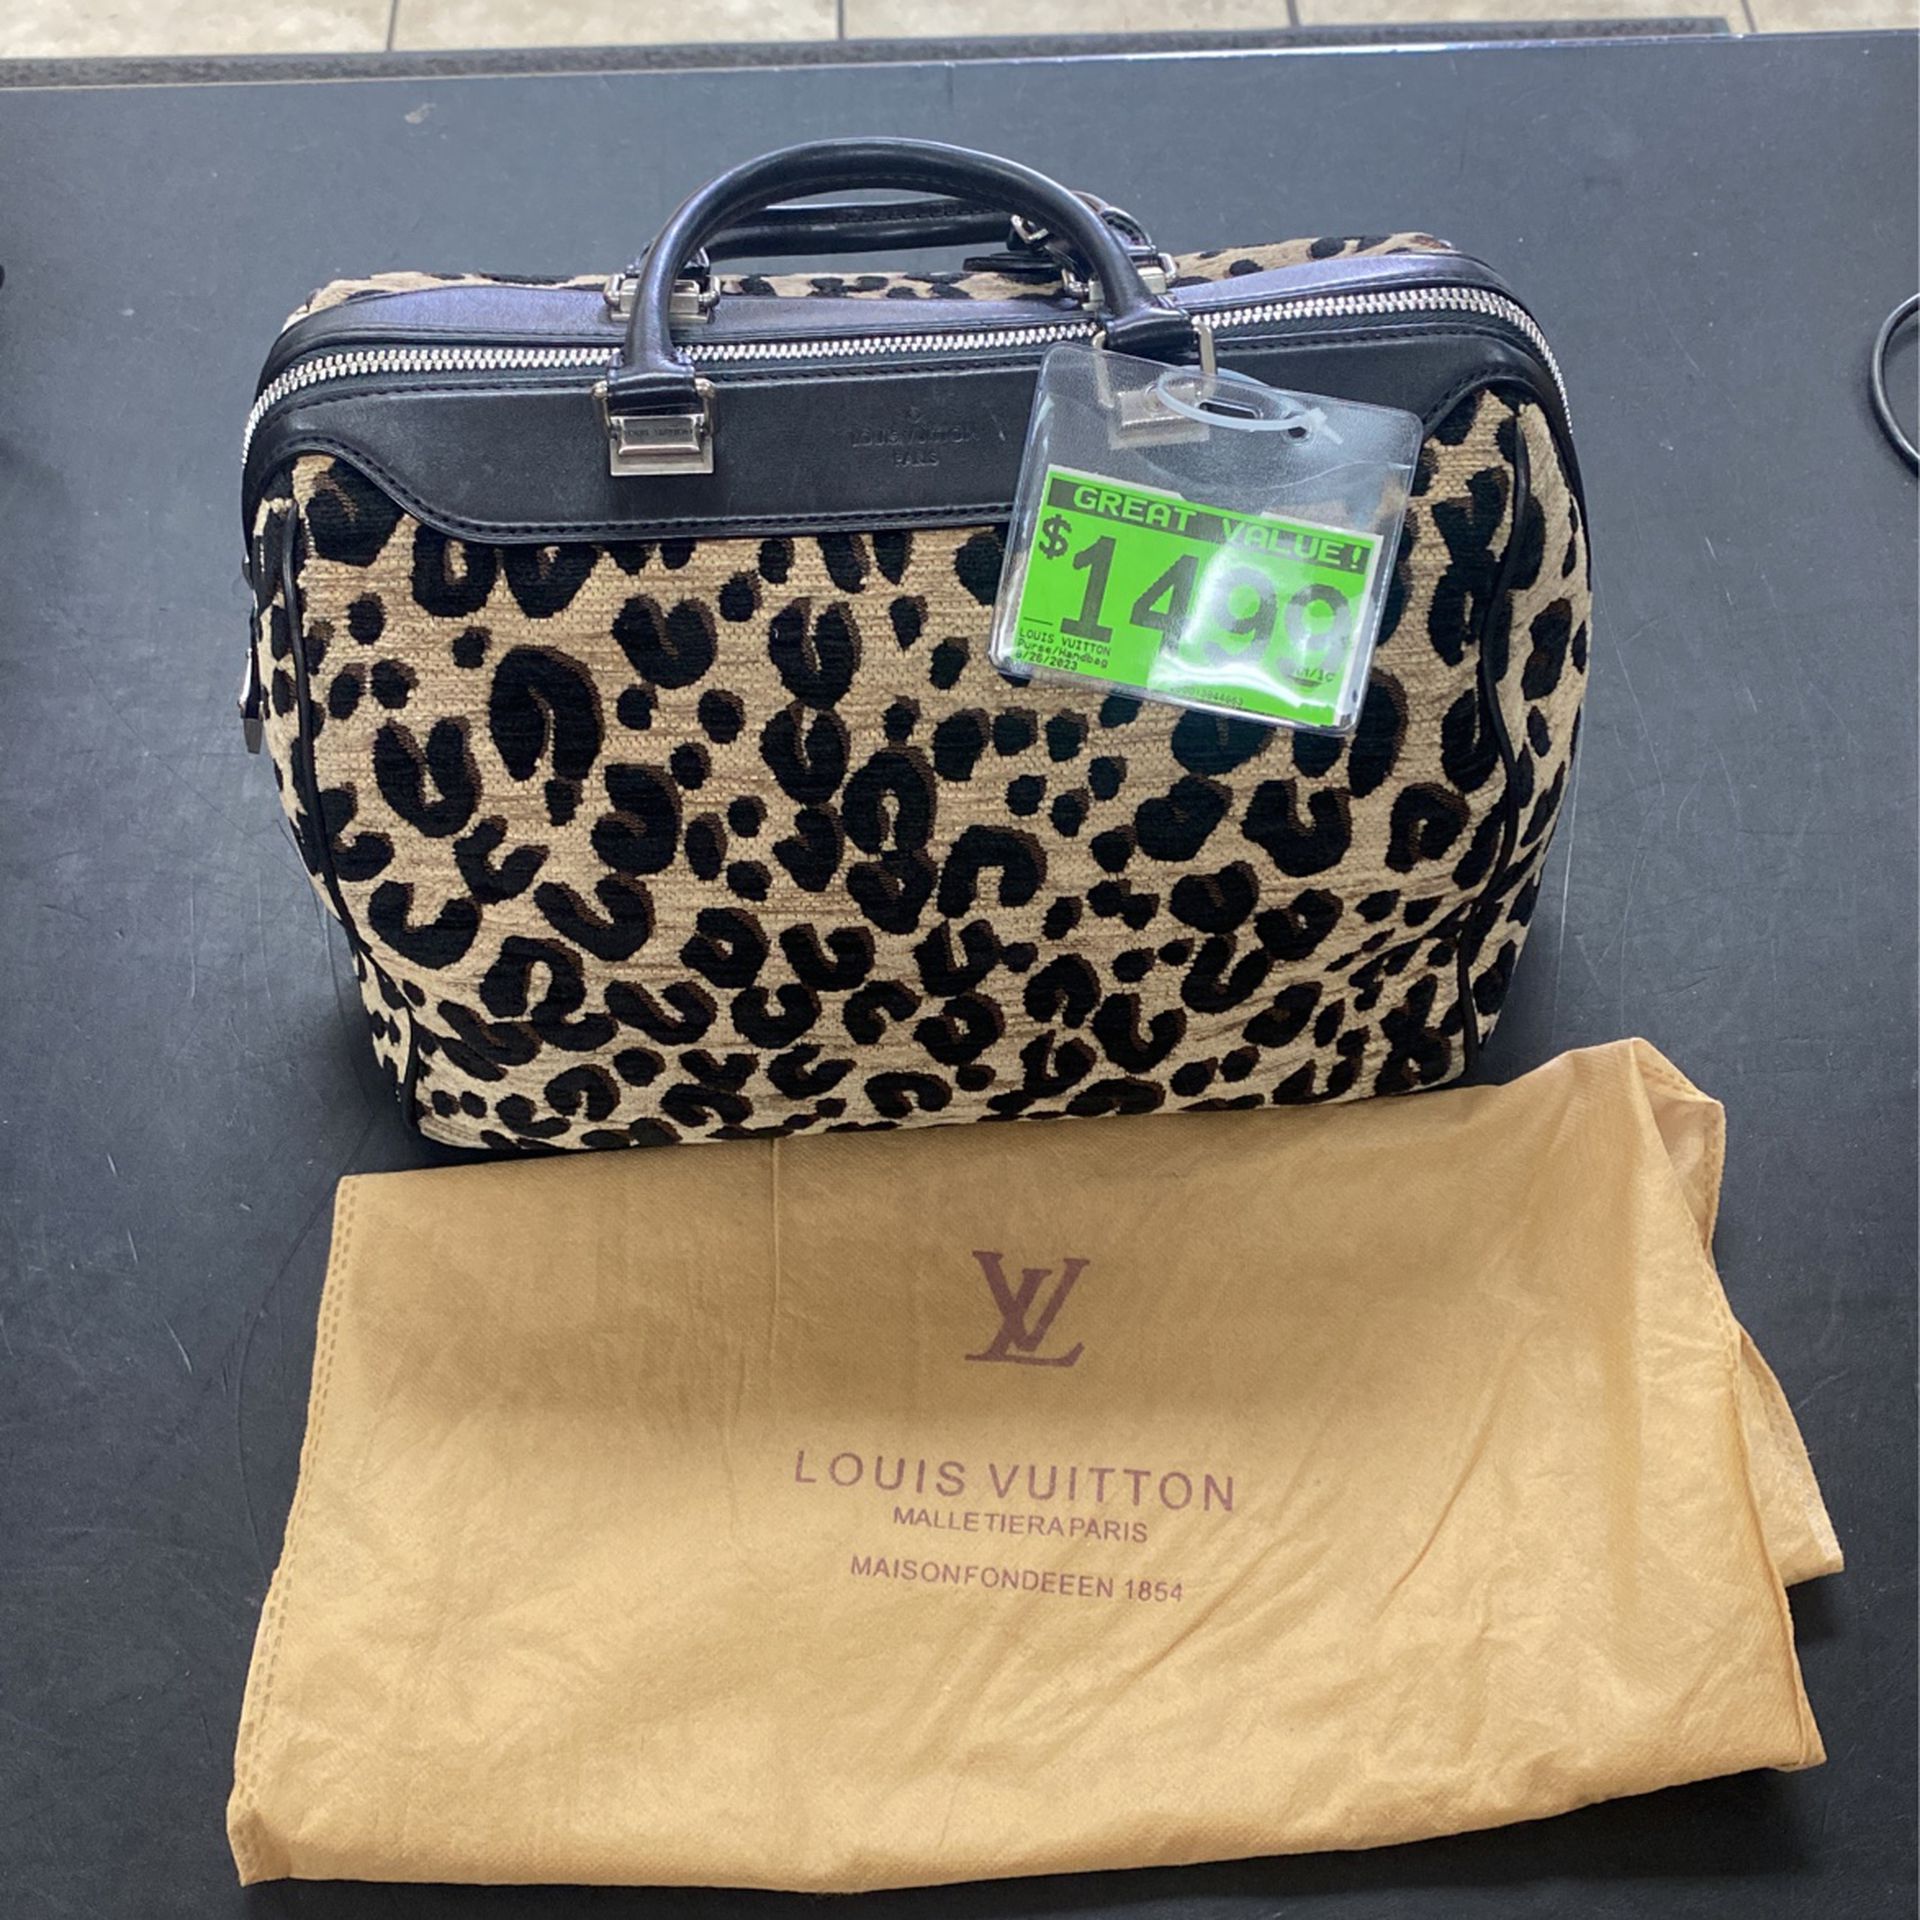 Louis Vuitton Speedy 30 Leopard Print Purse for Sale in Tucson, AZ